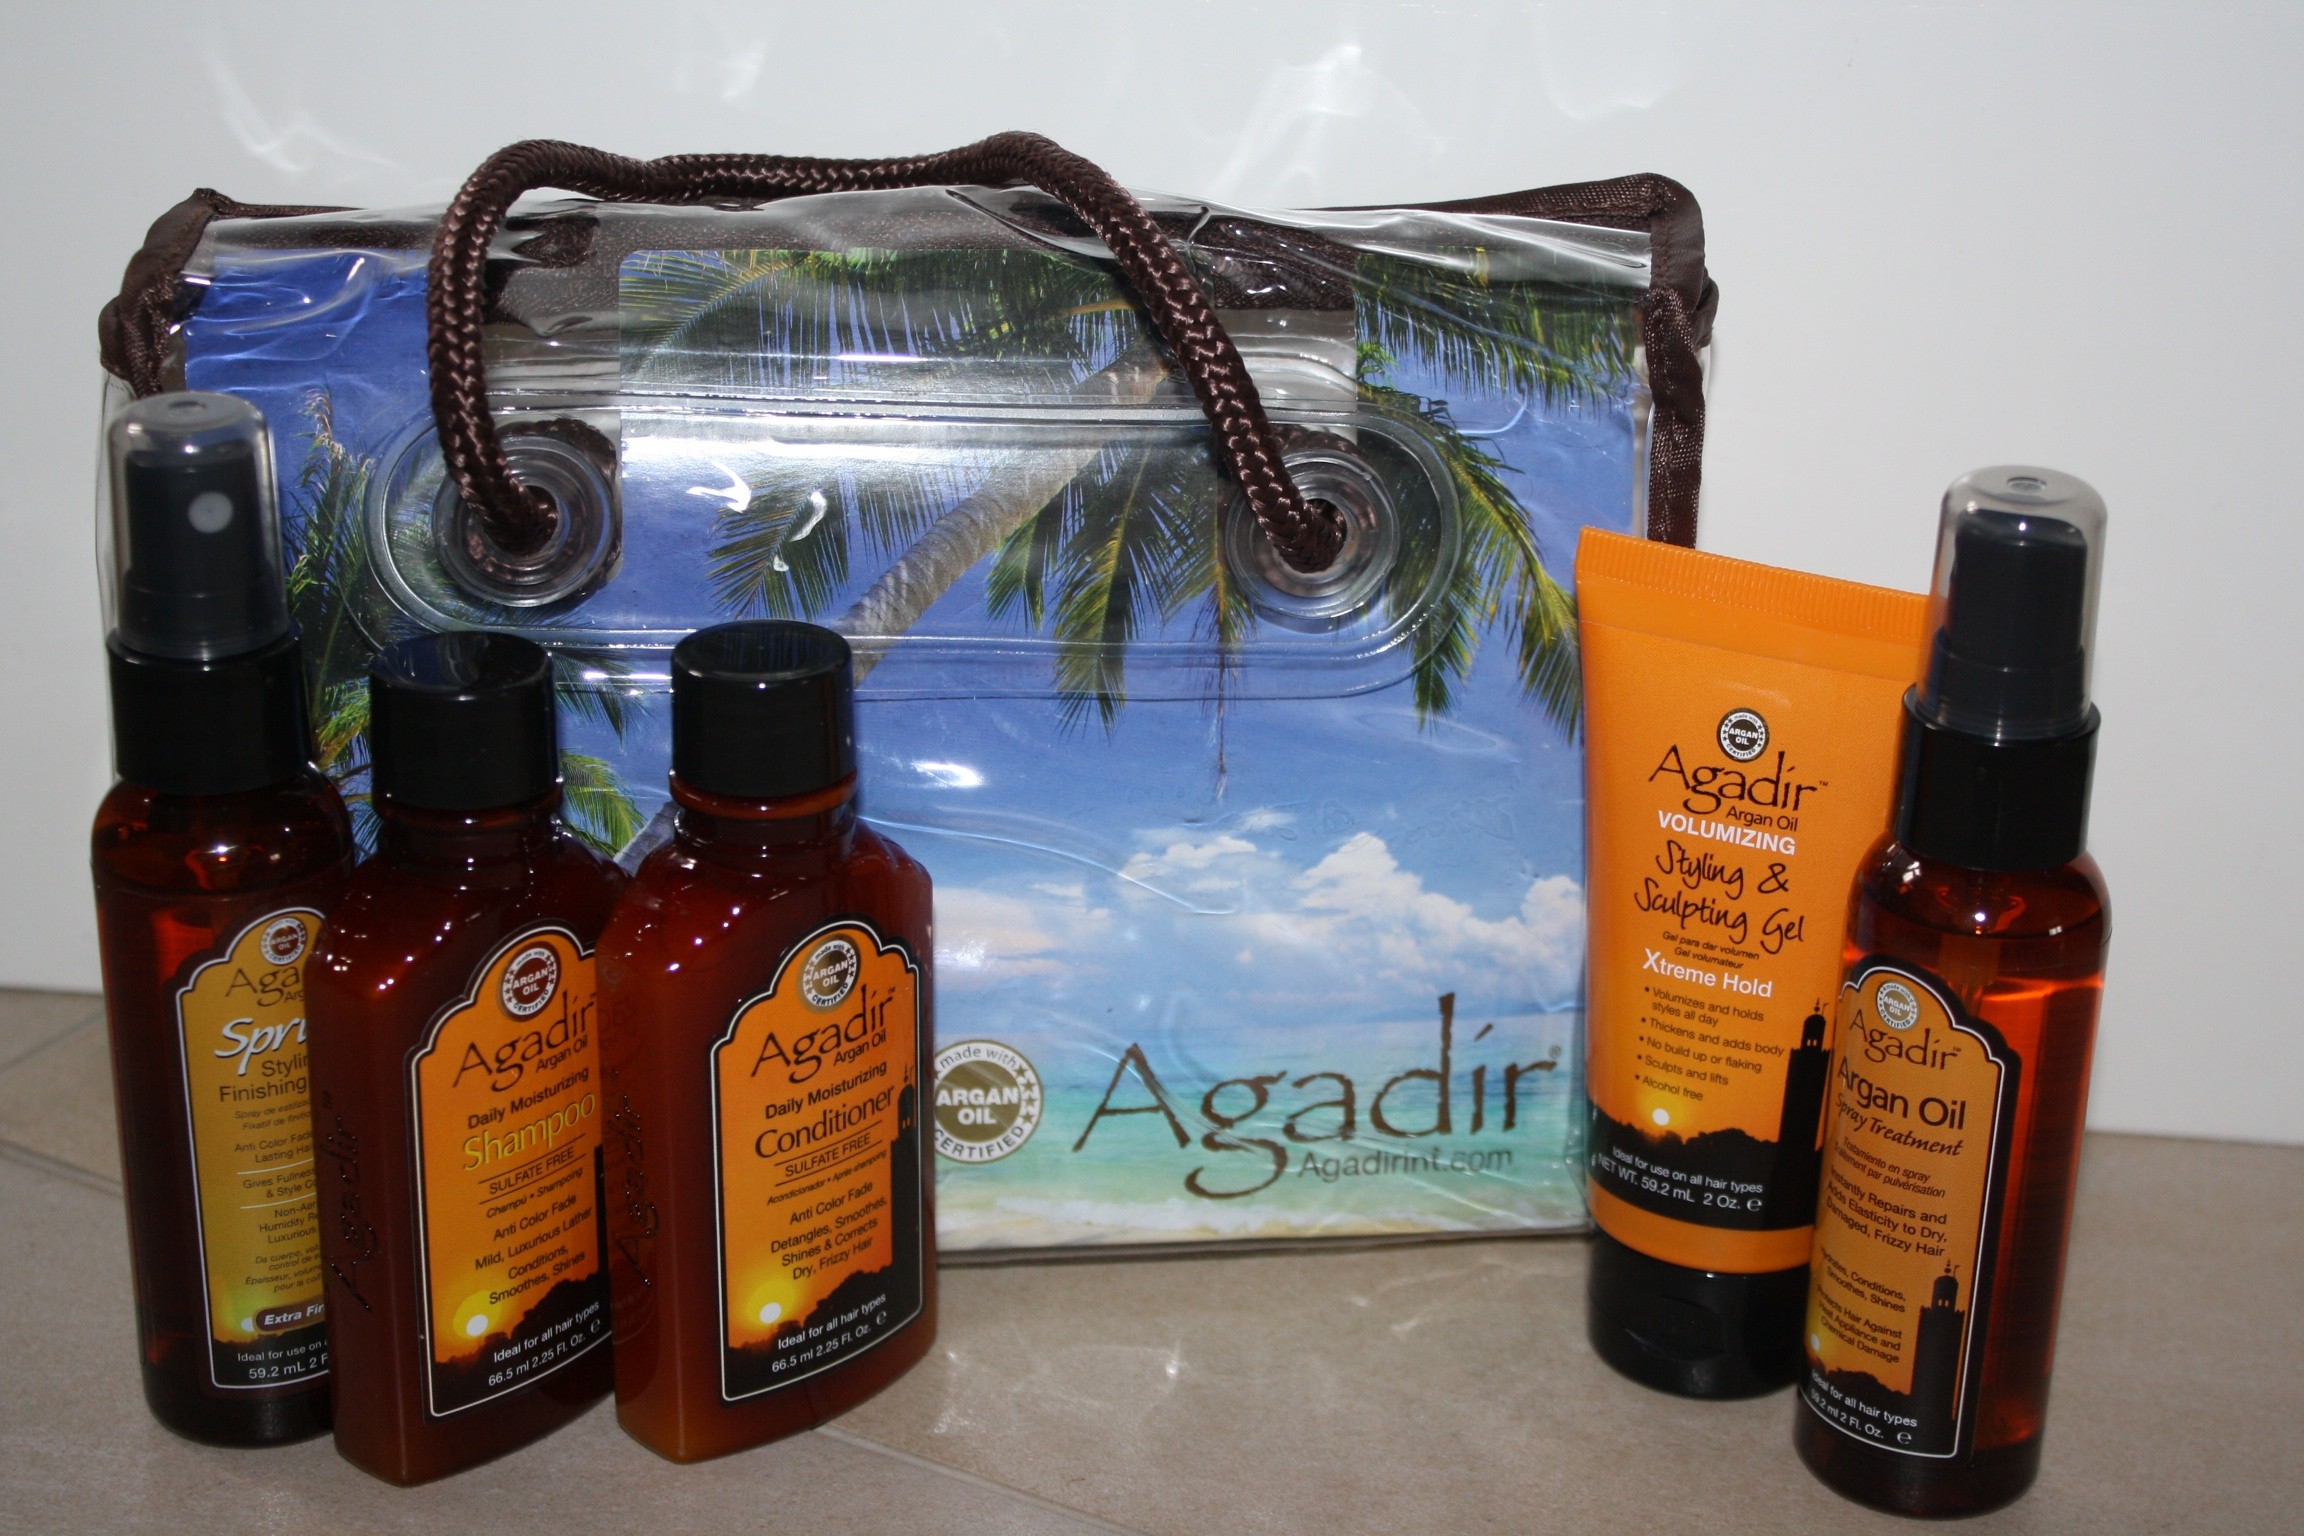 Agadir Argan Oil Travel Pack